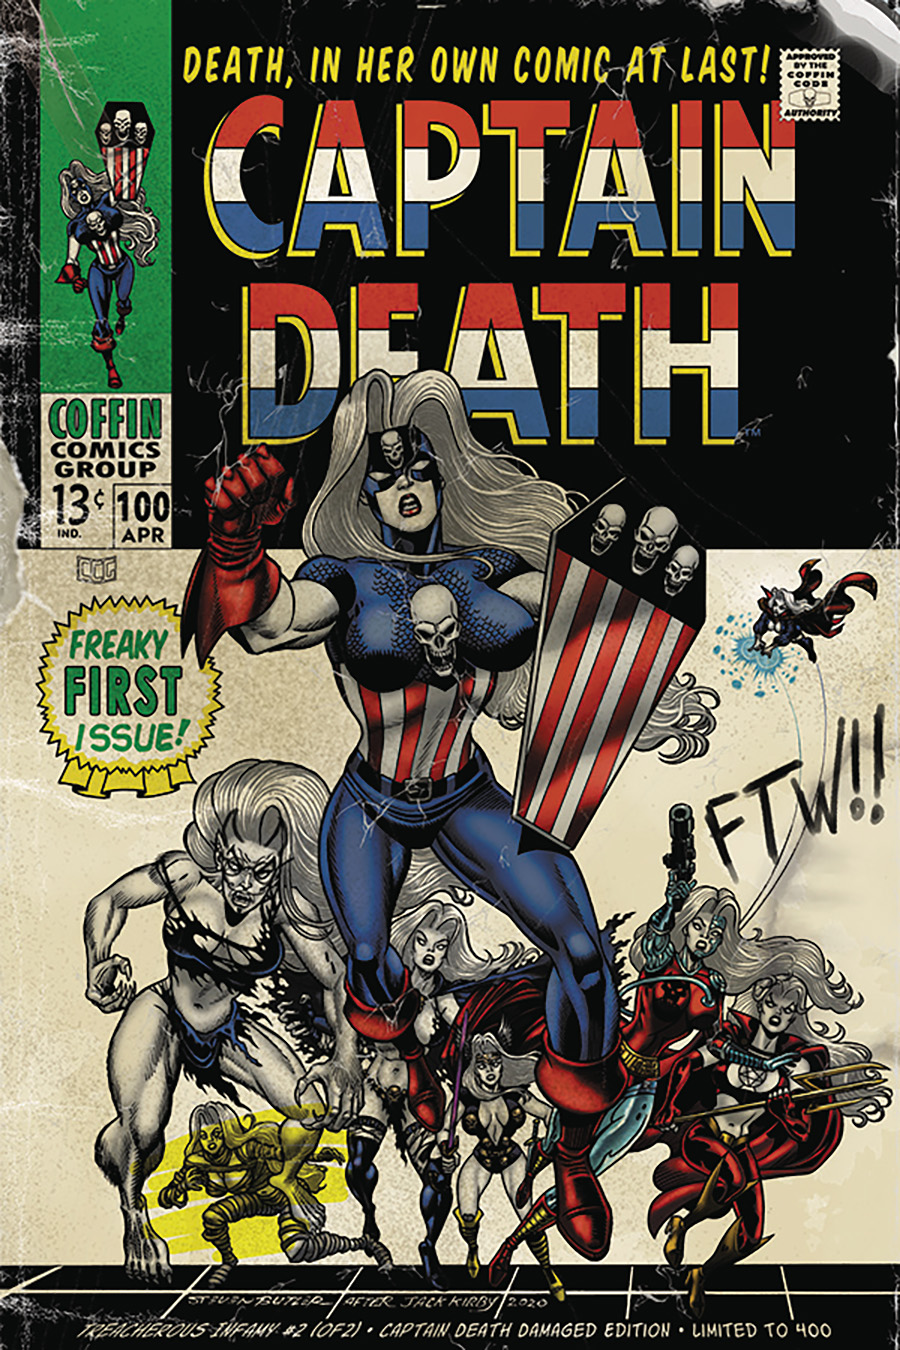 Lady Death Treacherous Infamy #2 Cover G Captain Death Damaged Edition